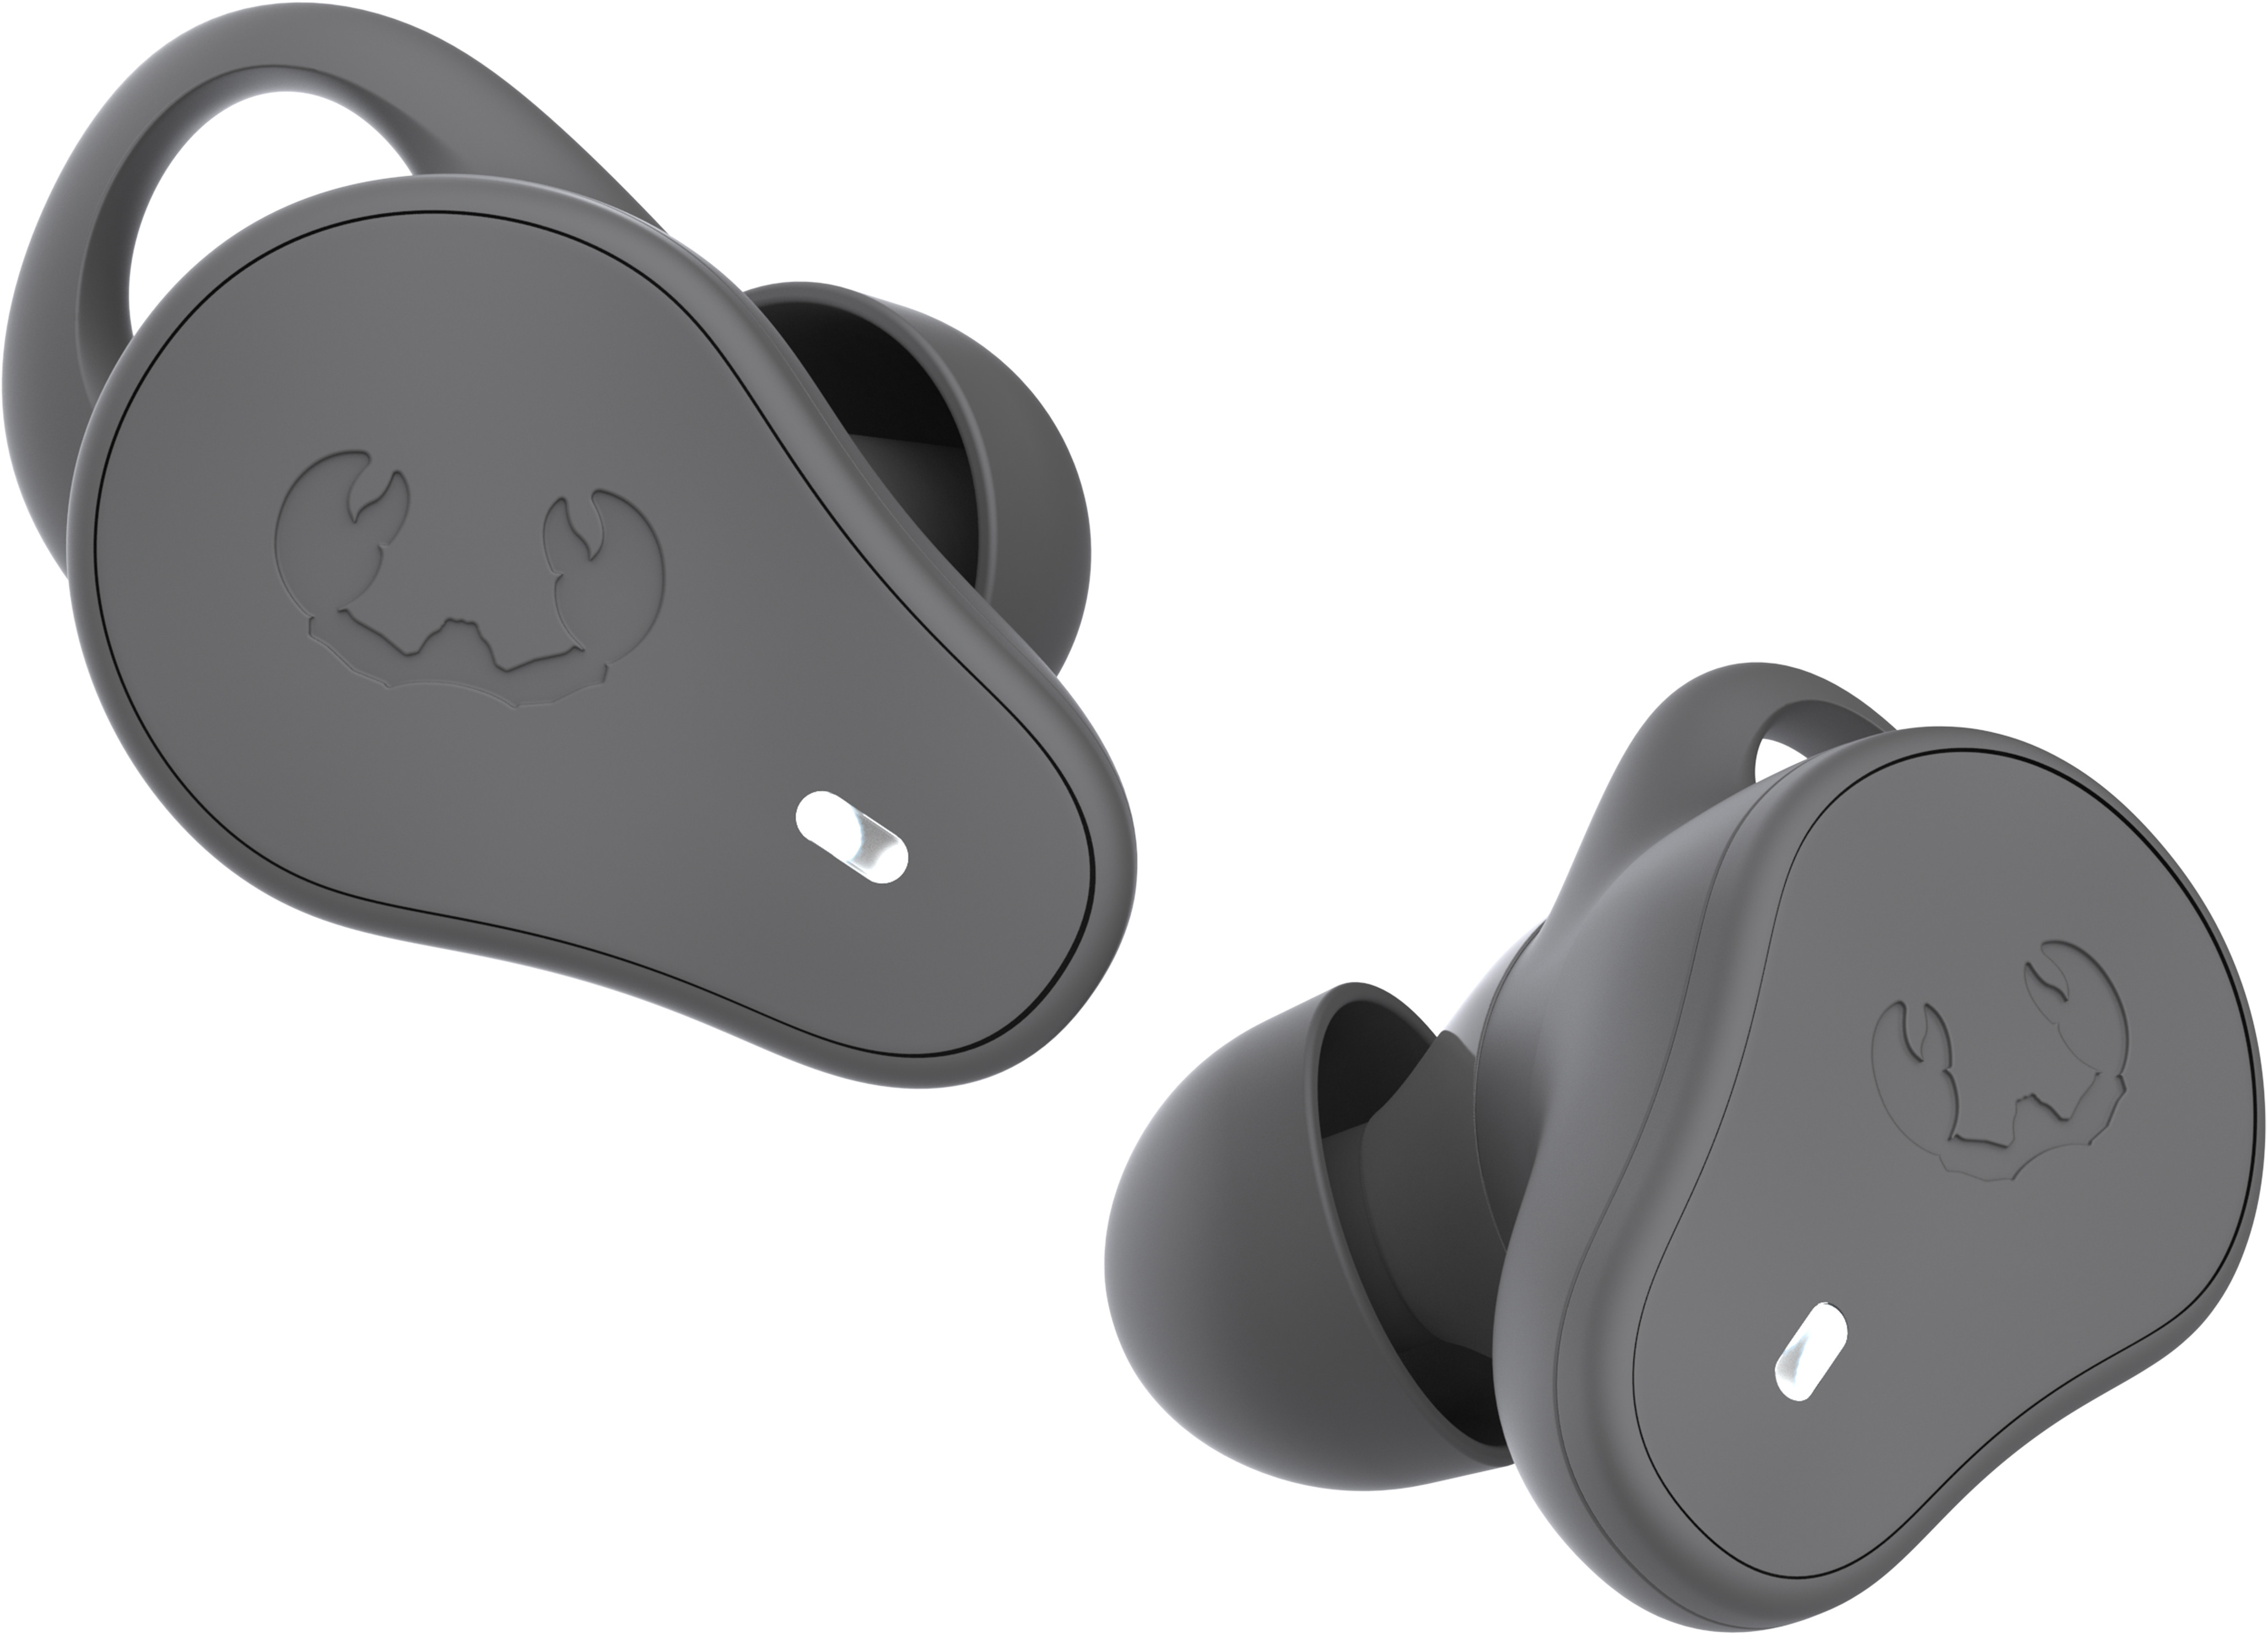 FRESH'N REBEL Twins Move - TWS earbuds 3TW1600SG Storm Grey sport earbuds